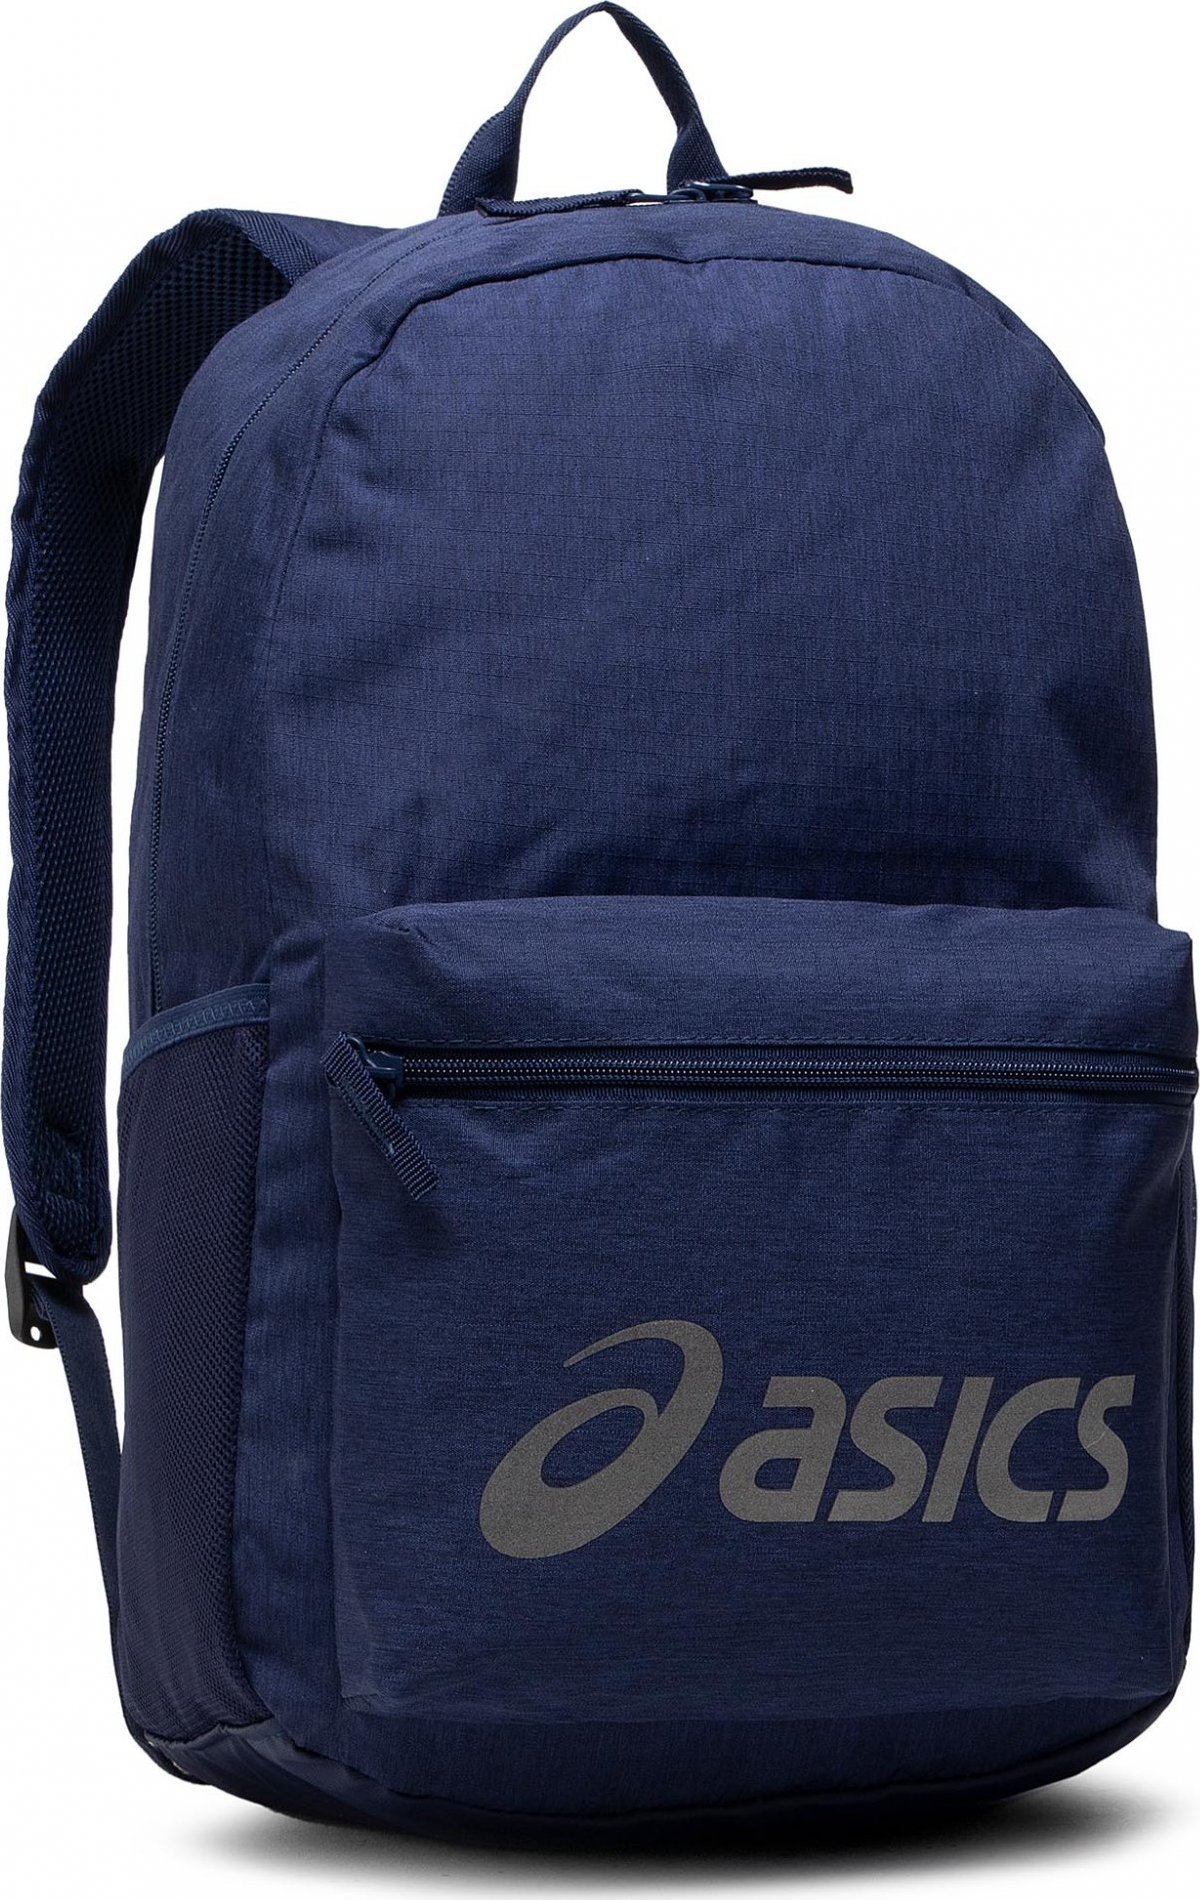 Asics Sport Backpack 3033A411